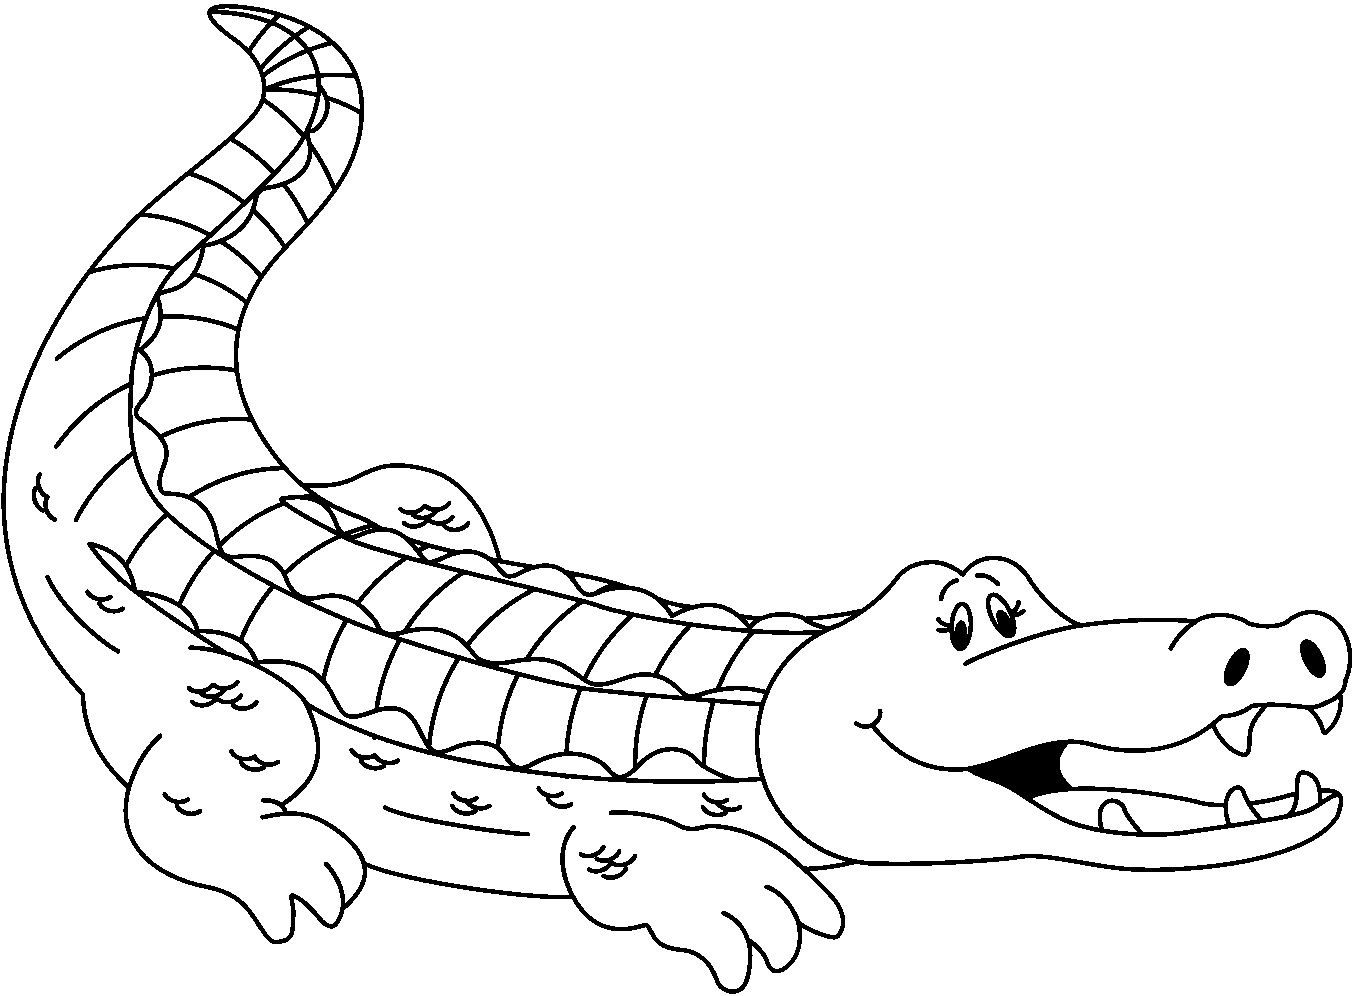 Alligator cliparts